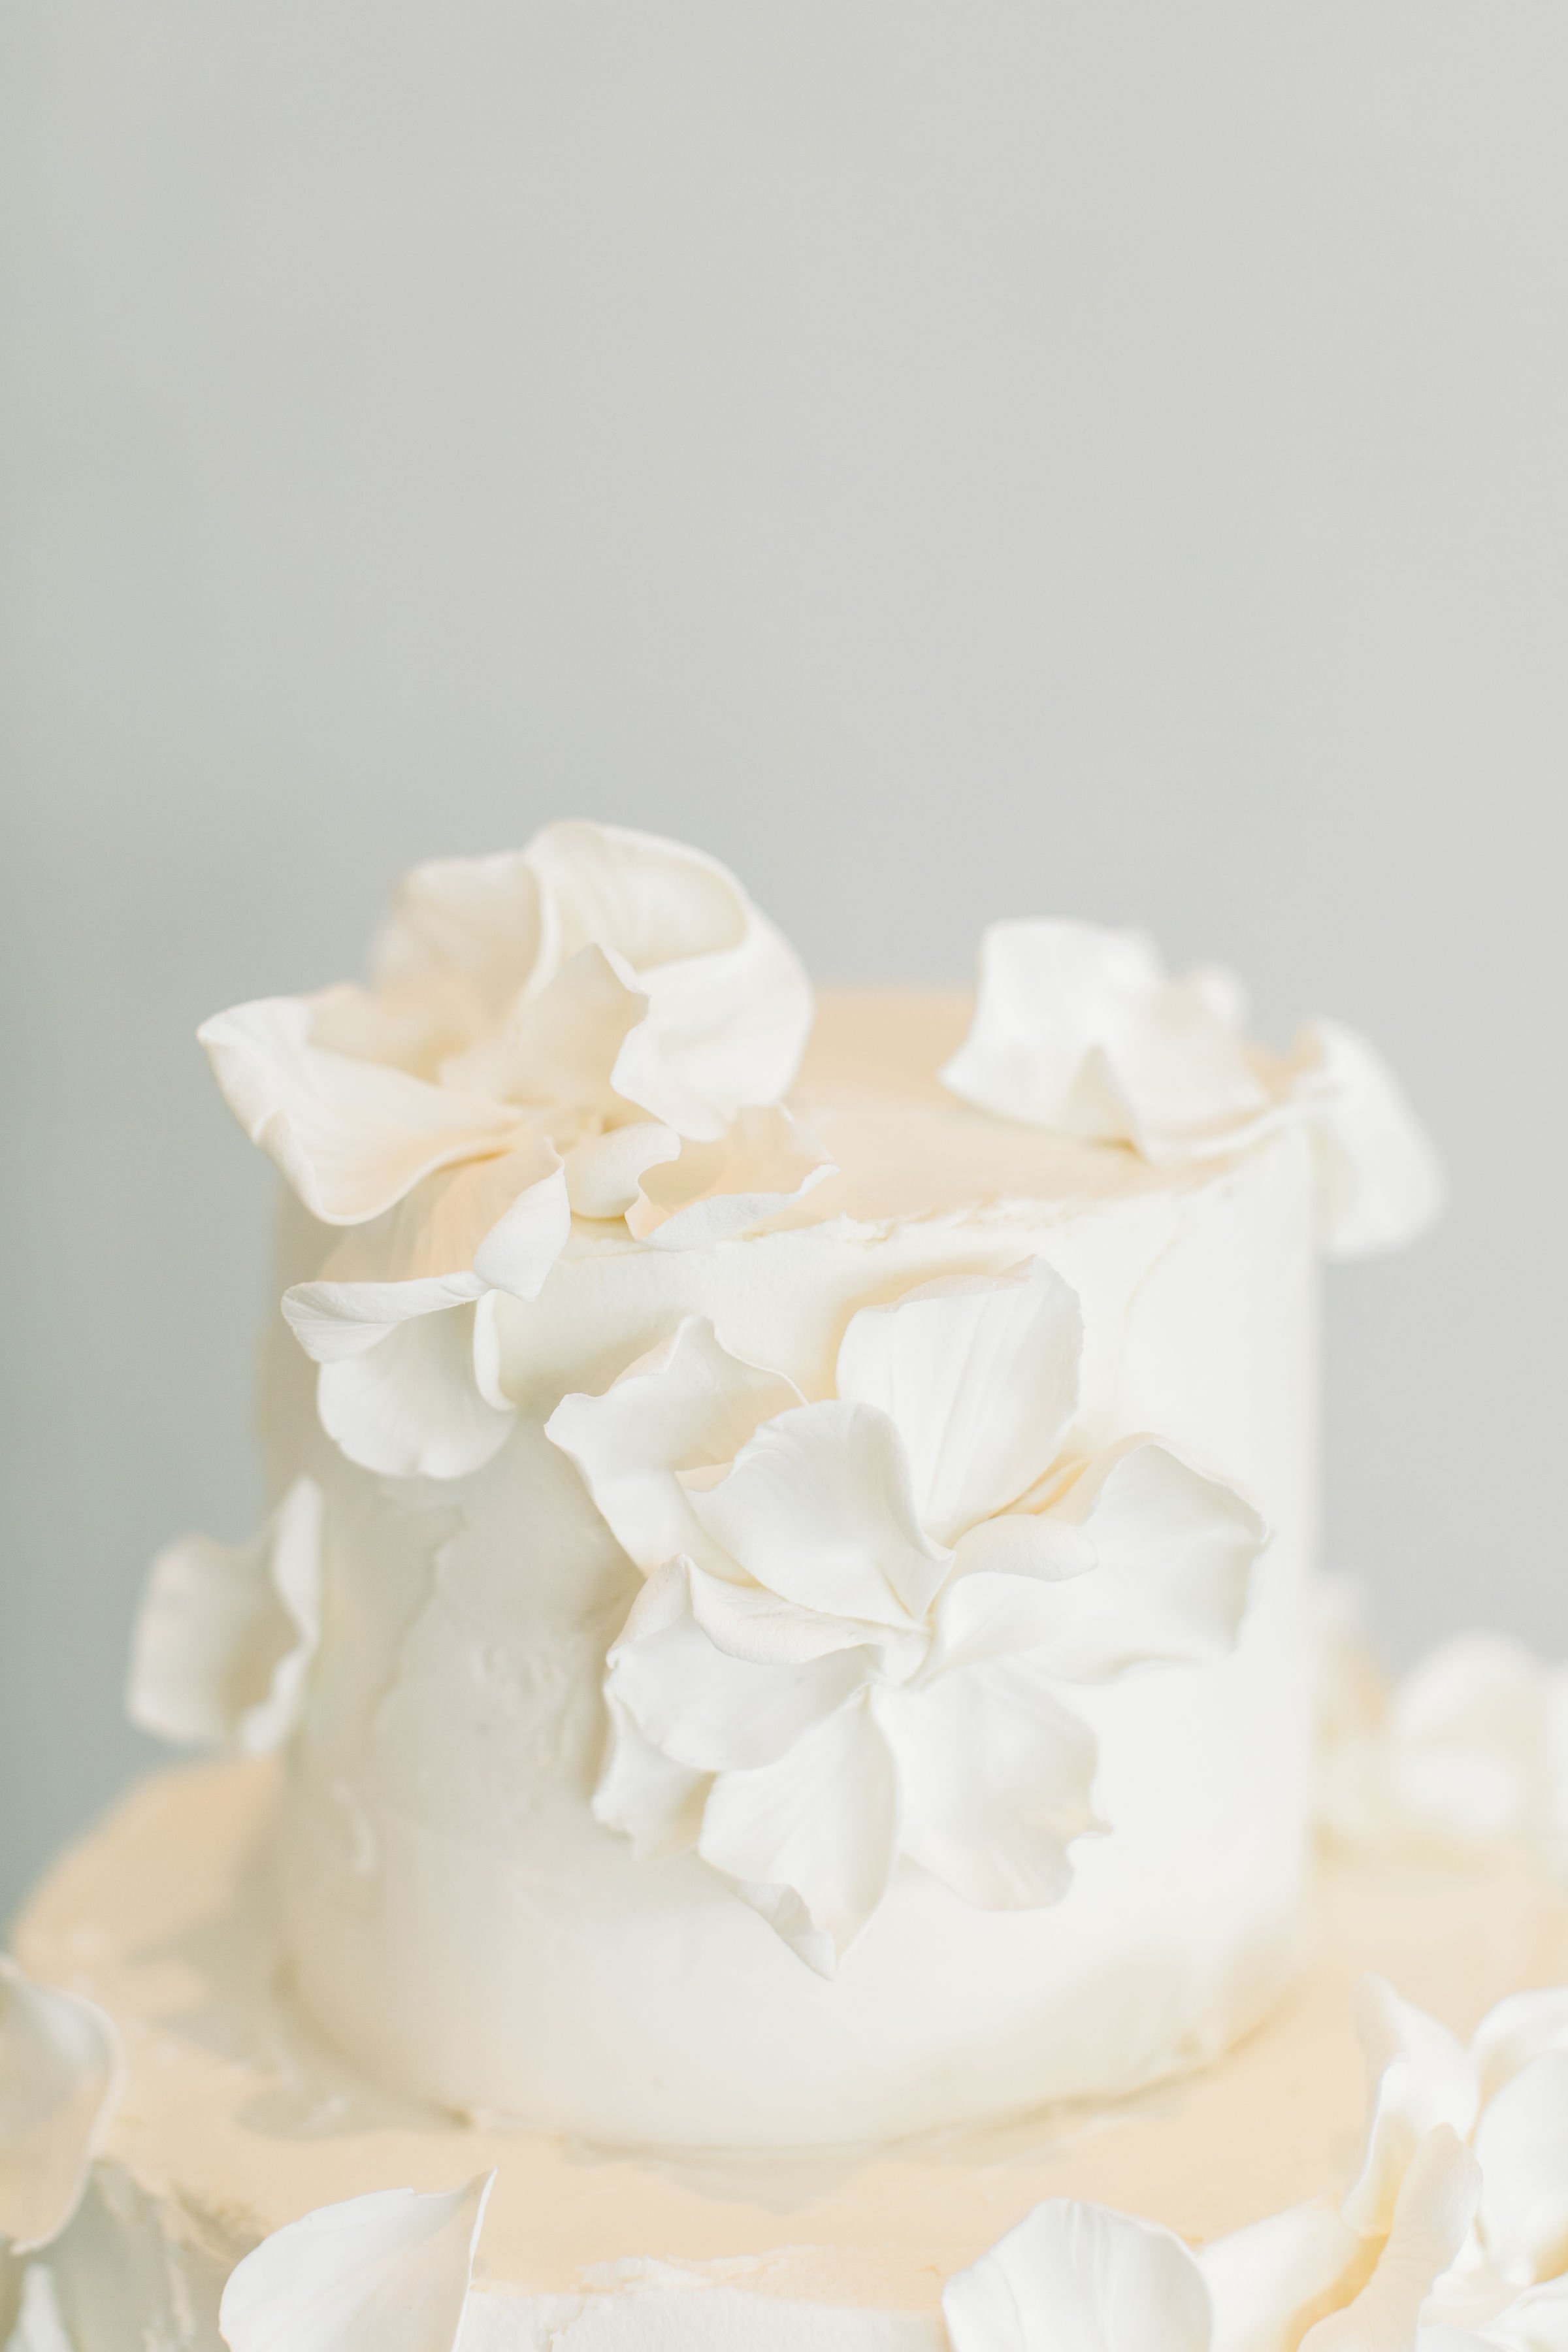  White buttercream wedding cake with fondant flower petal details by Chelsea Mason Photography. flower petal wedding cake two tier #Quebecweddings #elegantoutdoorwedding #Quebecweddingphotographers #Chelseamasonphotography #Chelseamasonweddings 